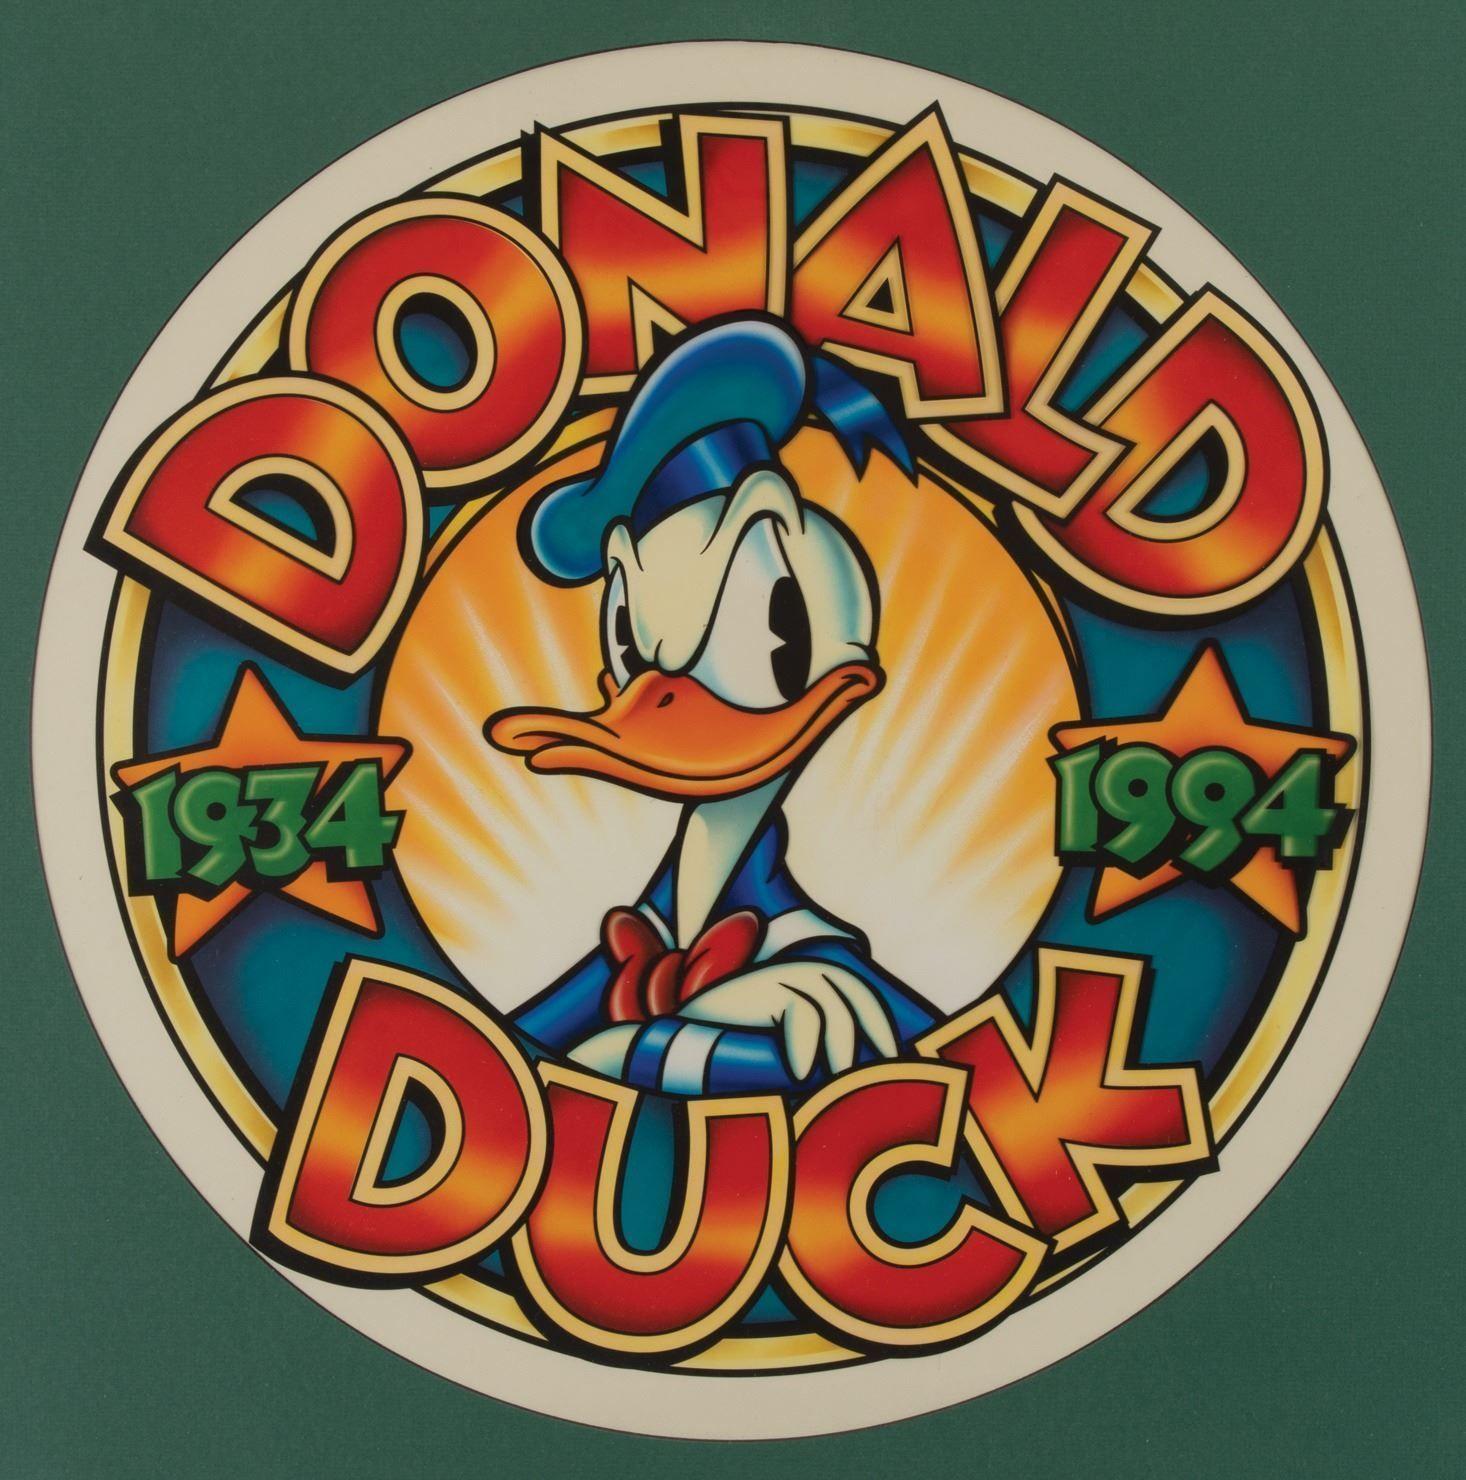 Donald Duck Logo - “Donald Duck” 60th Anniversary logo illustration art.